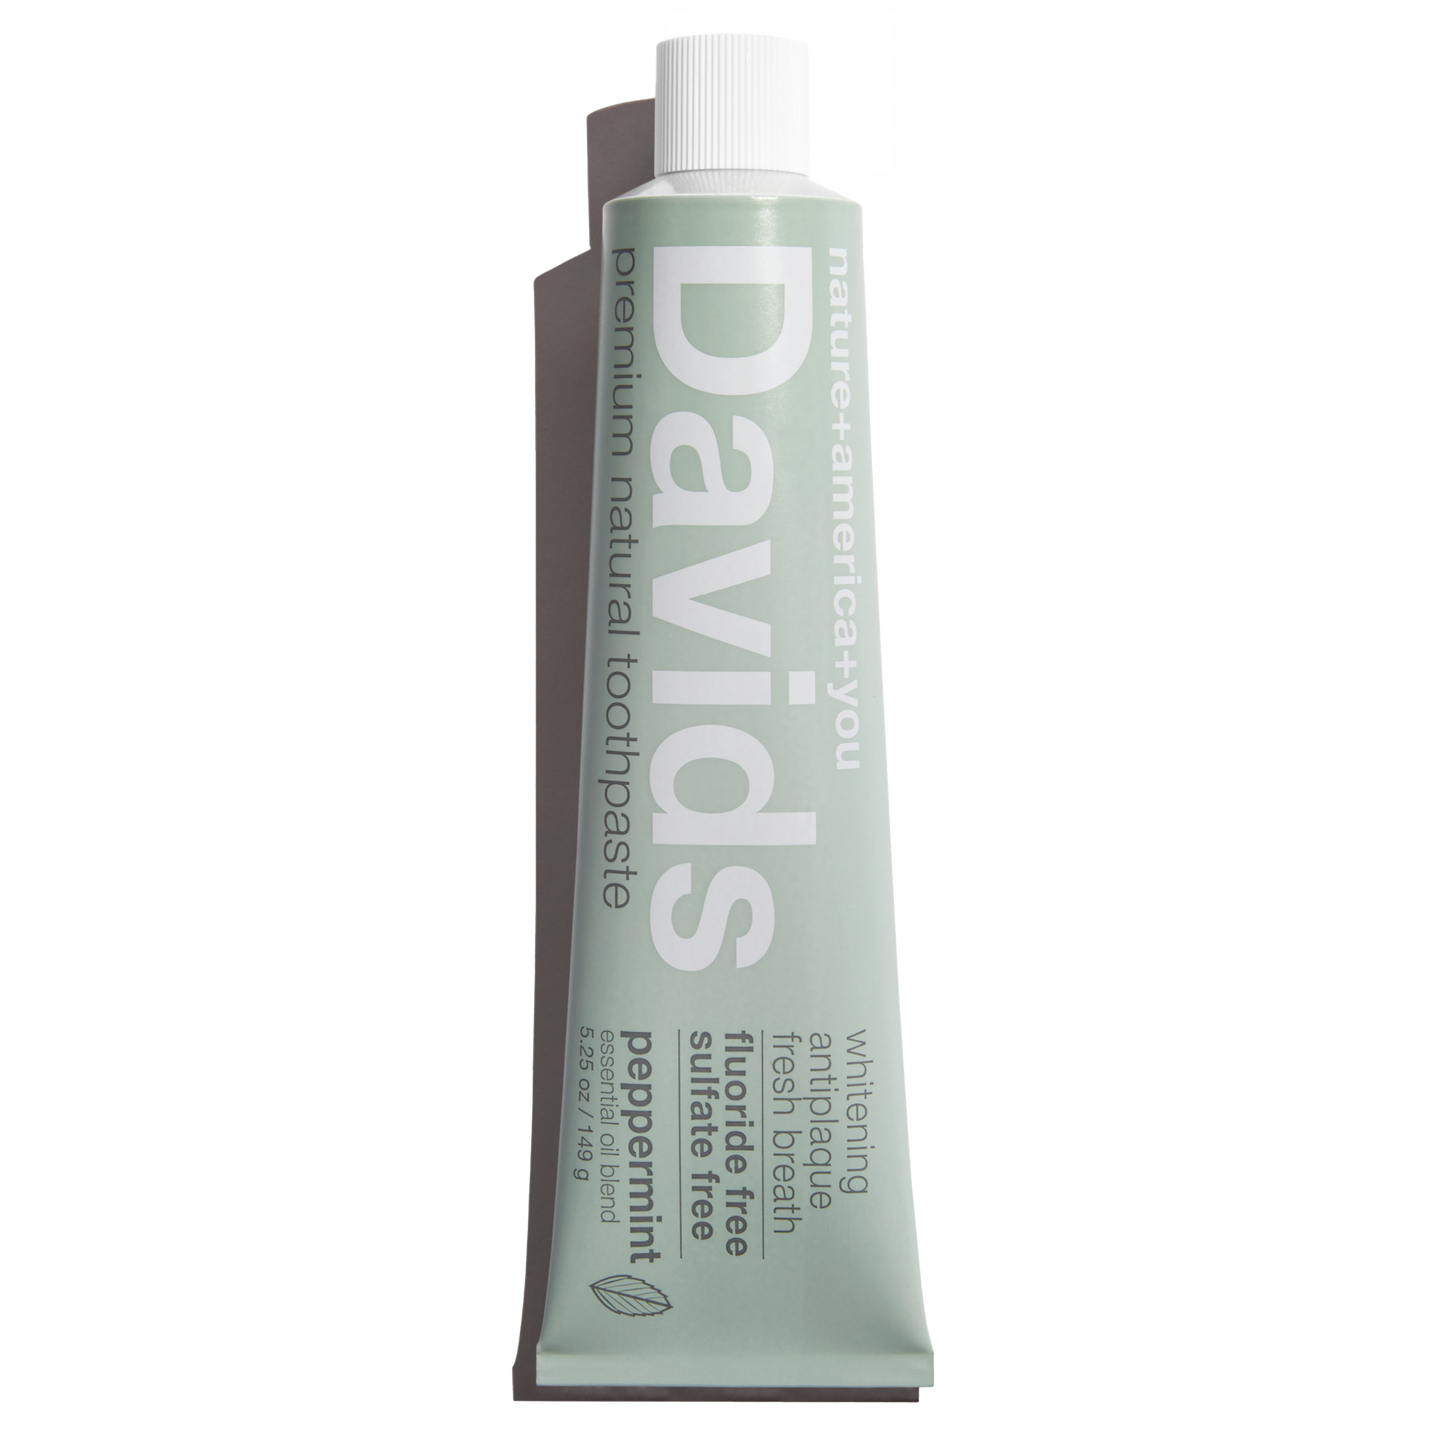 Davids peppermint premium natural toothpaste